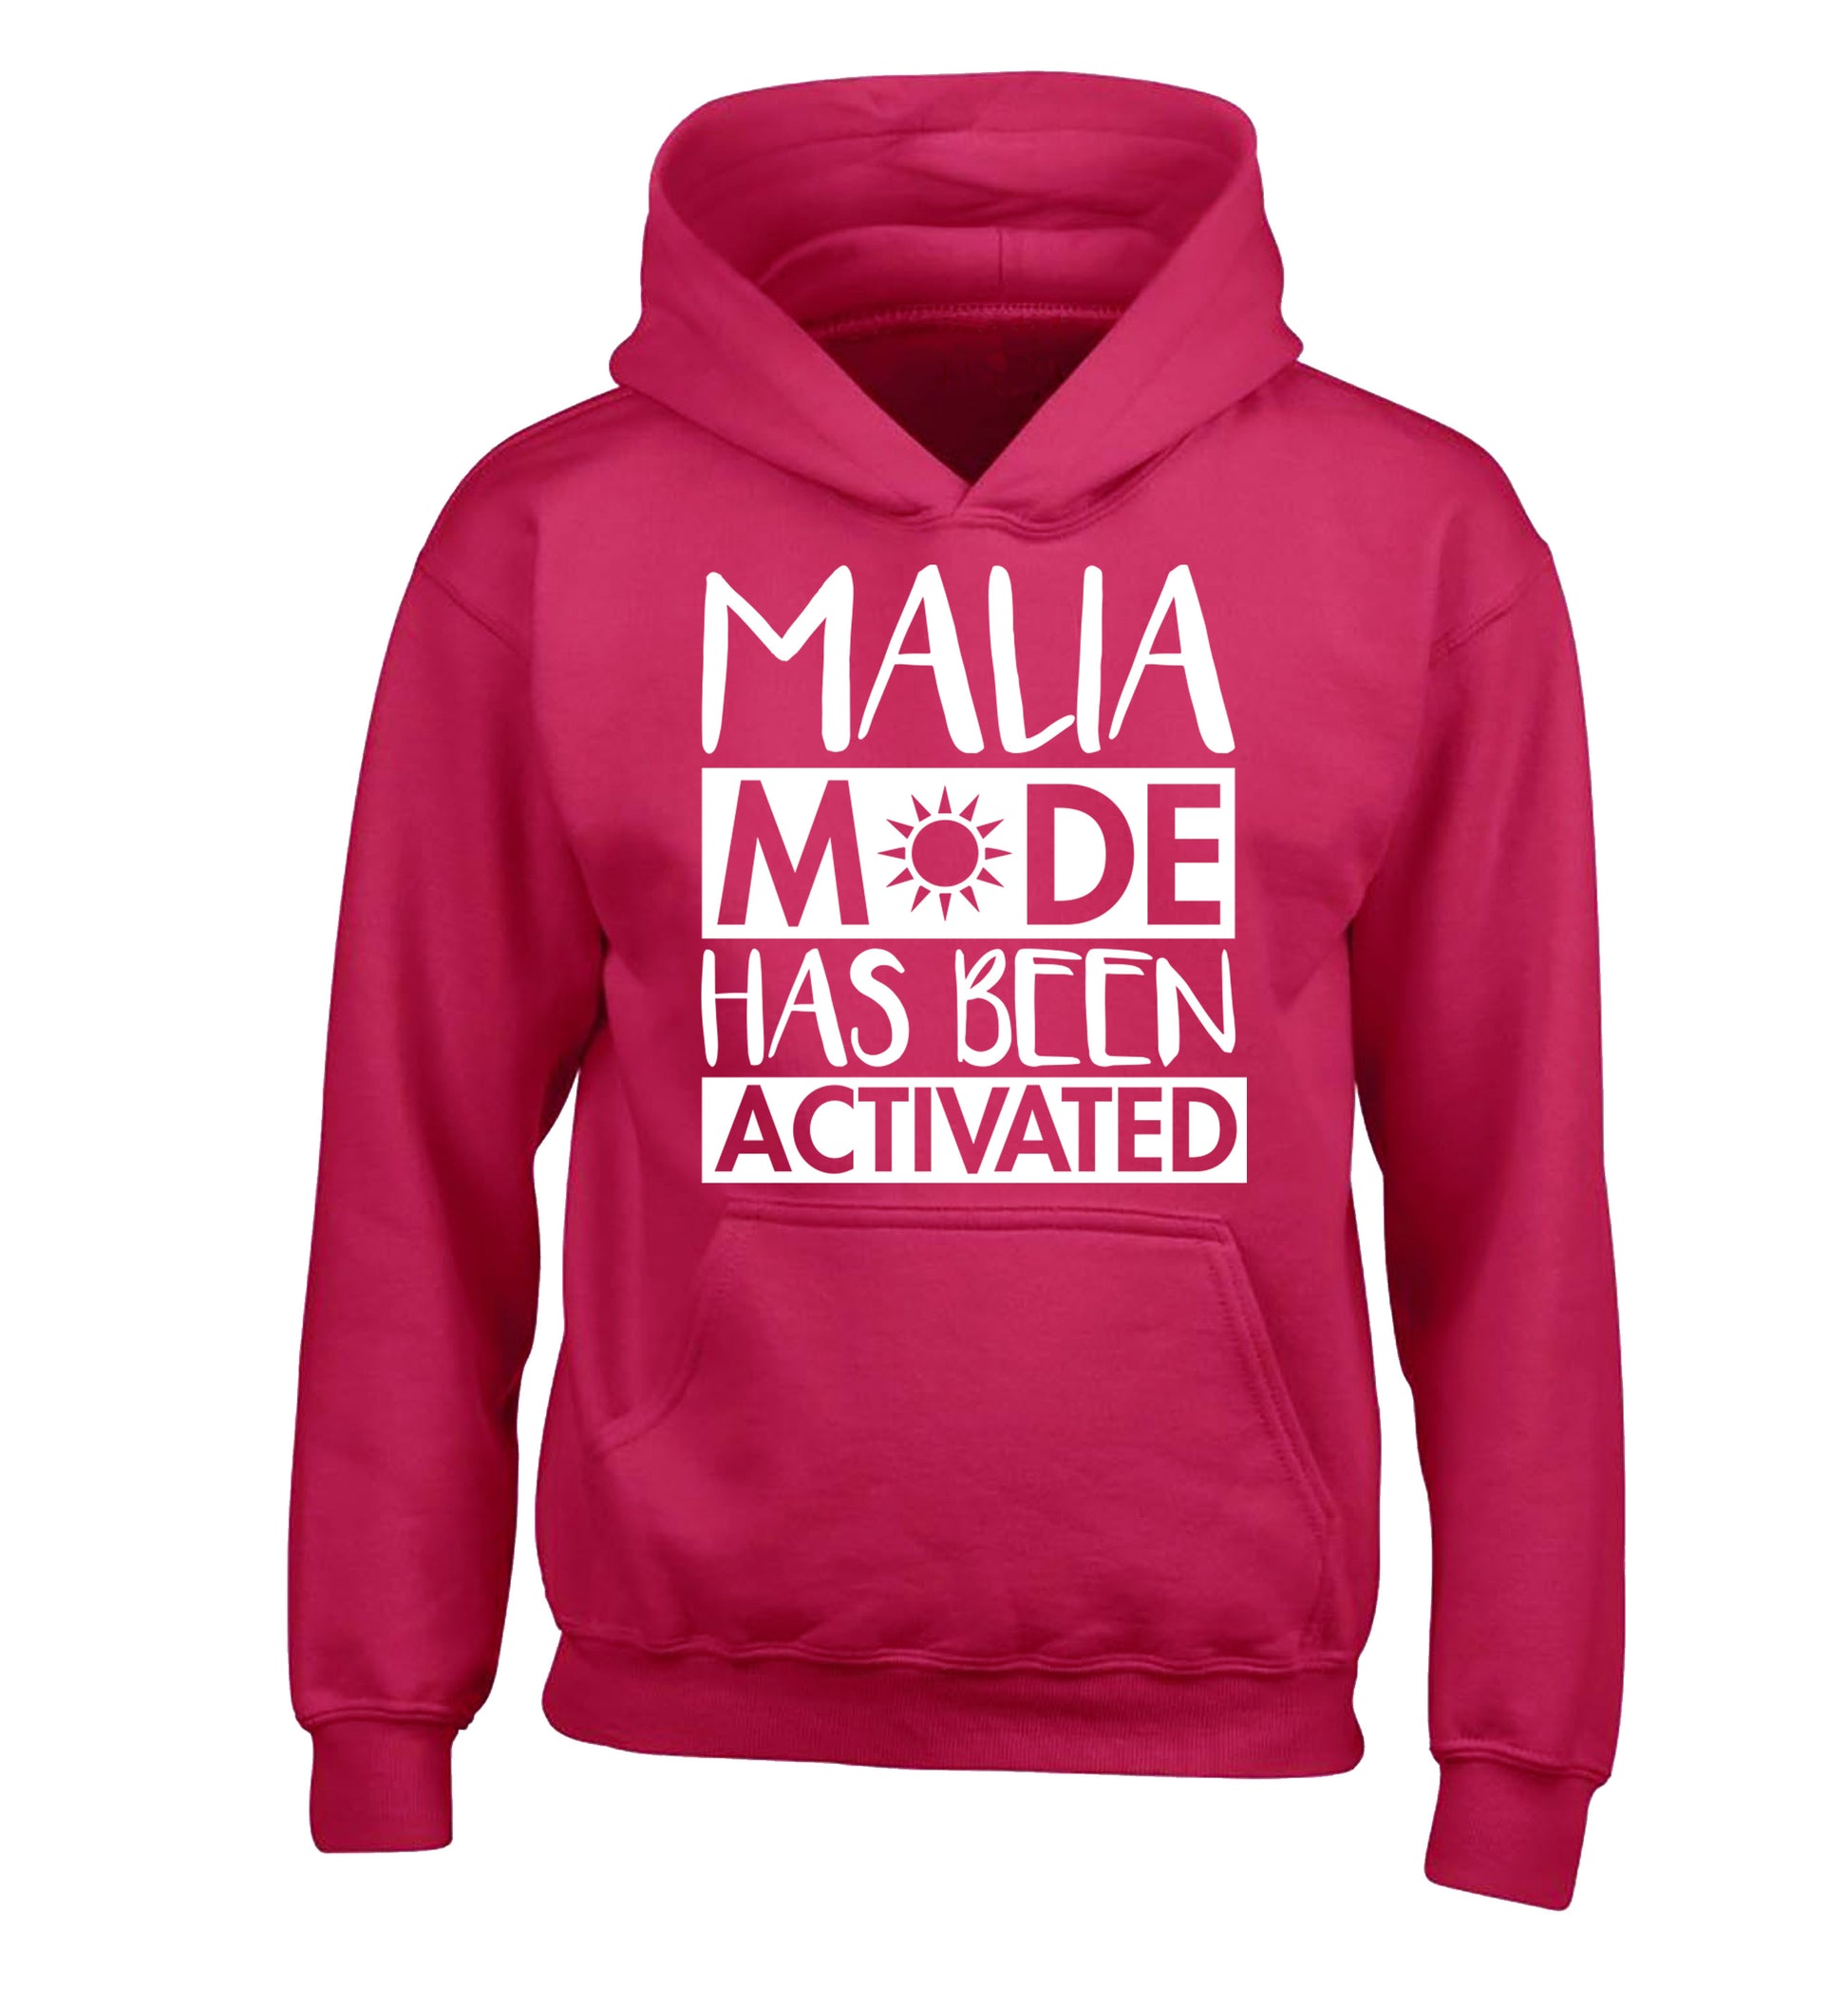 Malia mode has been activated children's pink hoodie 12-13 Years